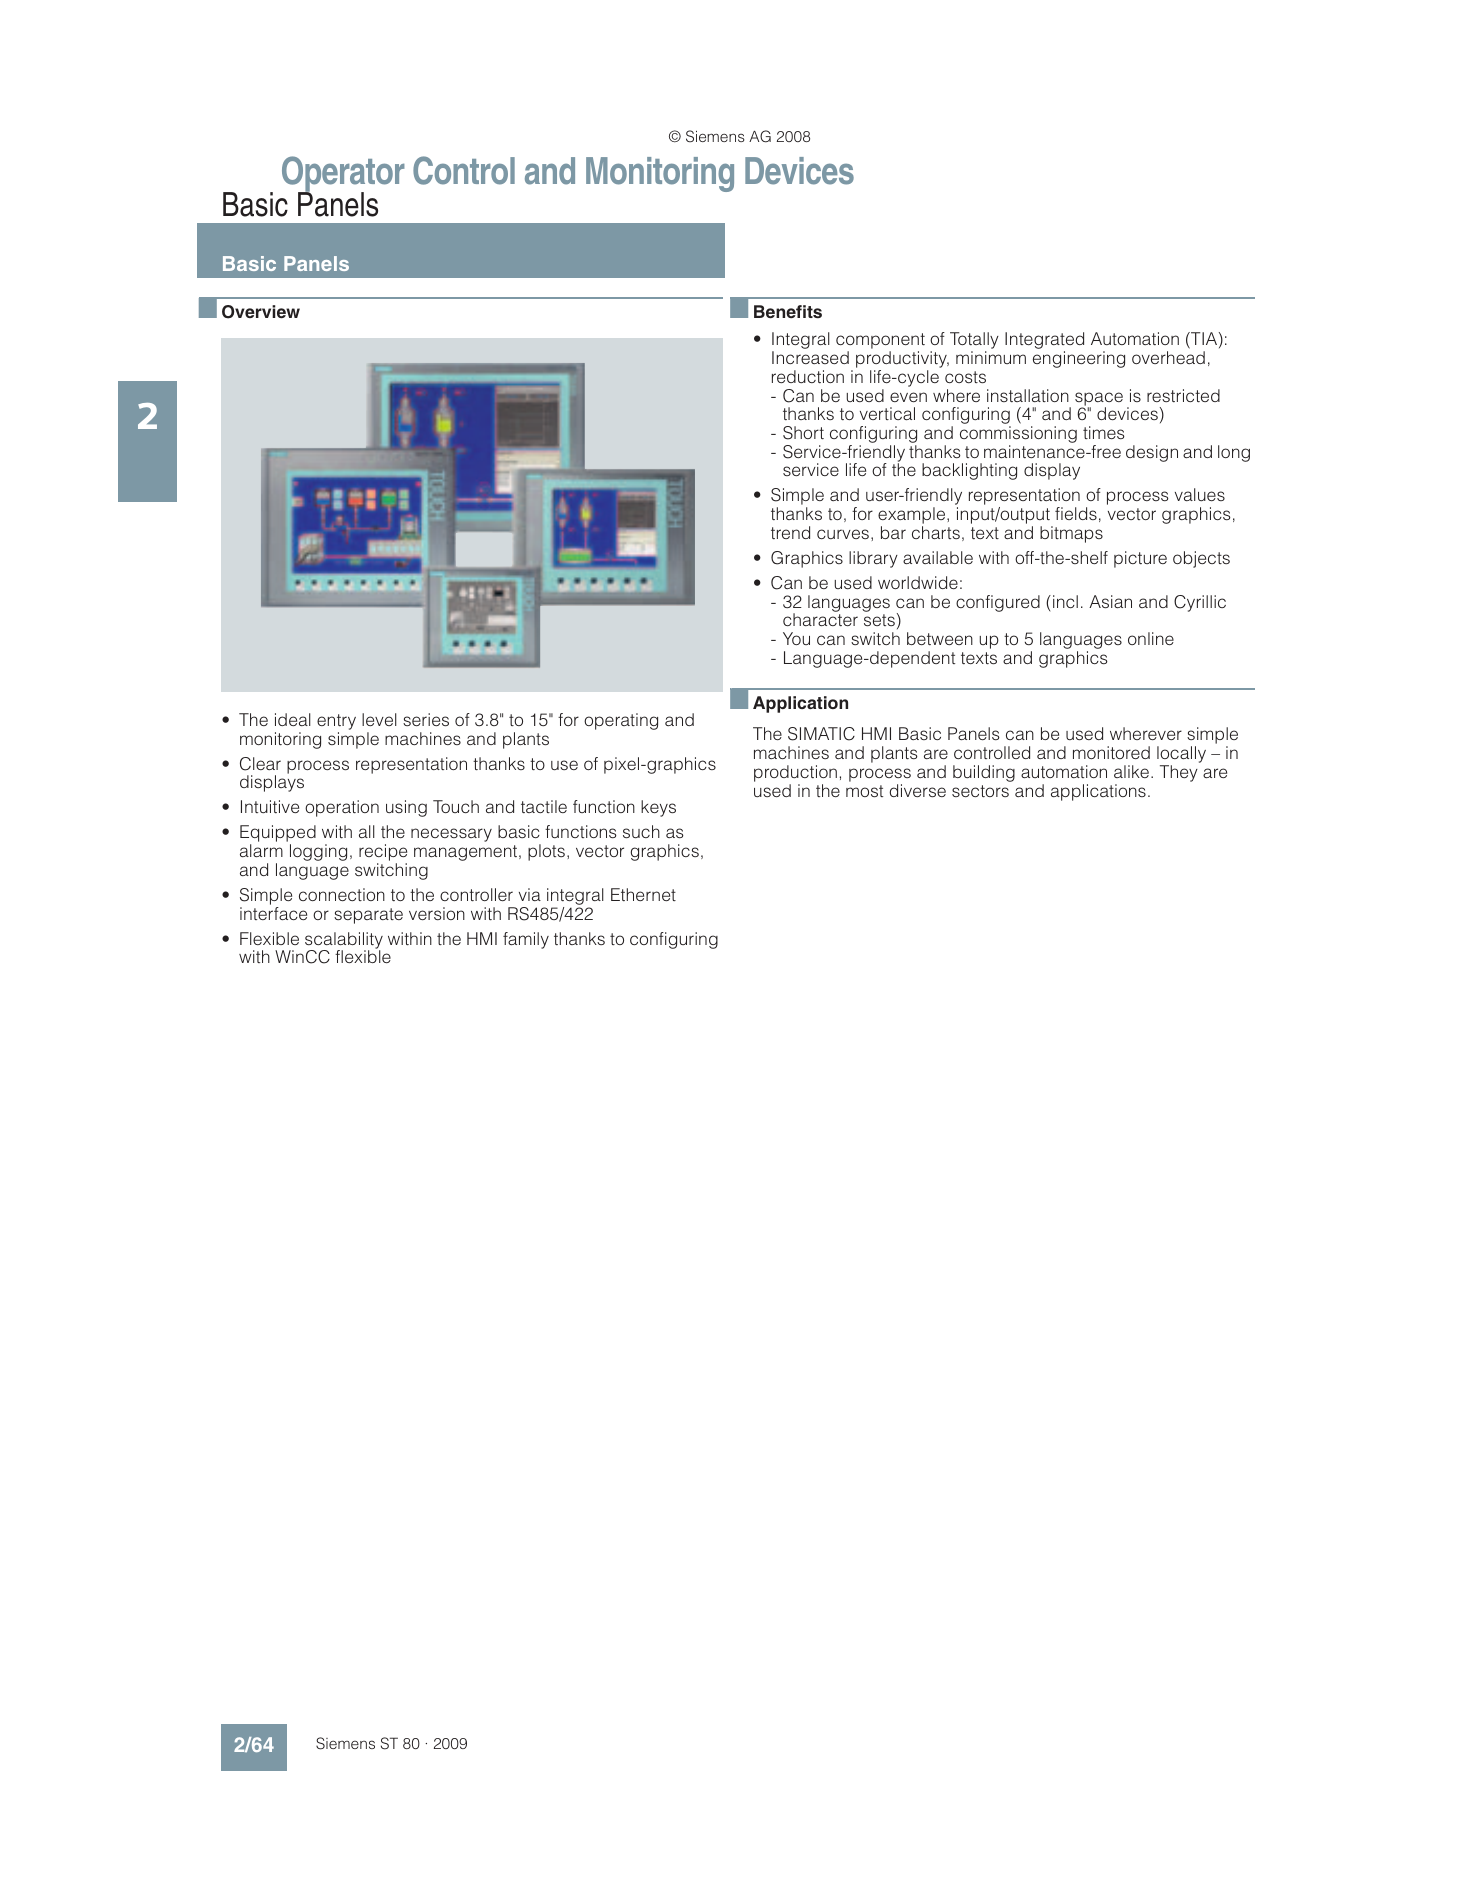 microsoft sql server 2005 instance wincc pdf free